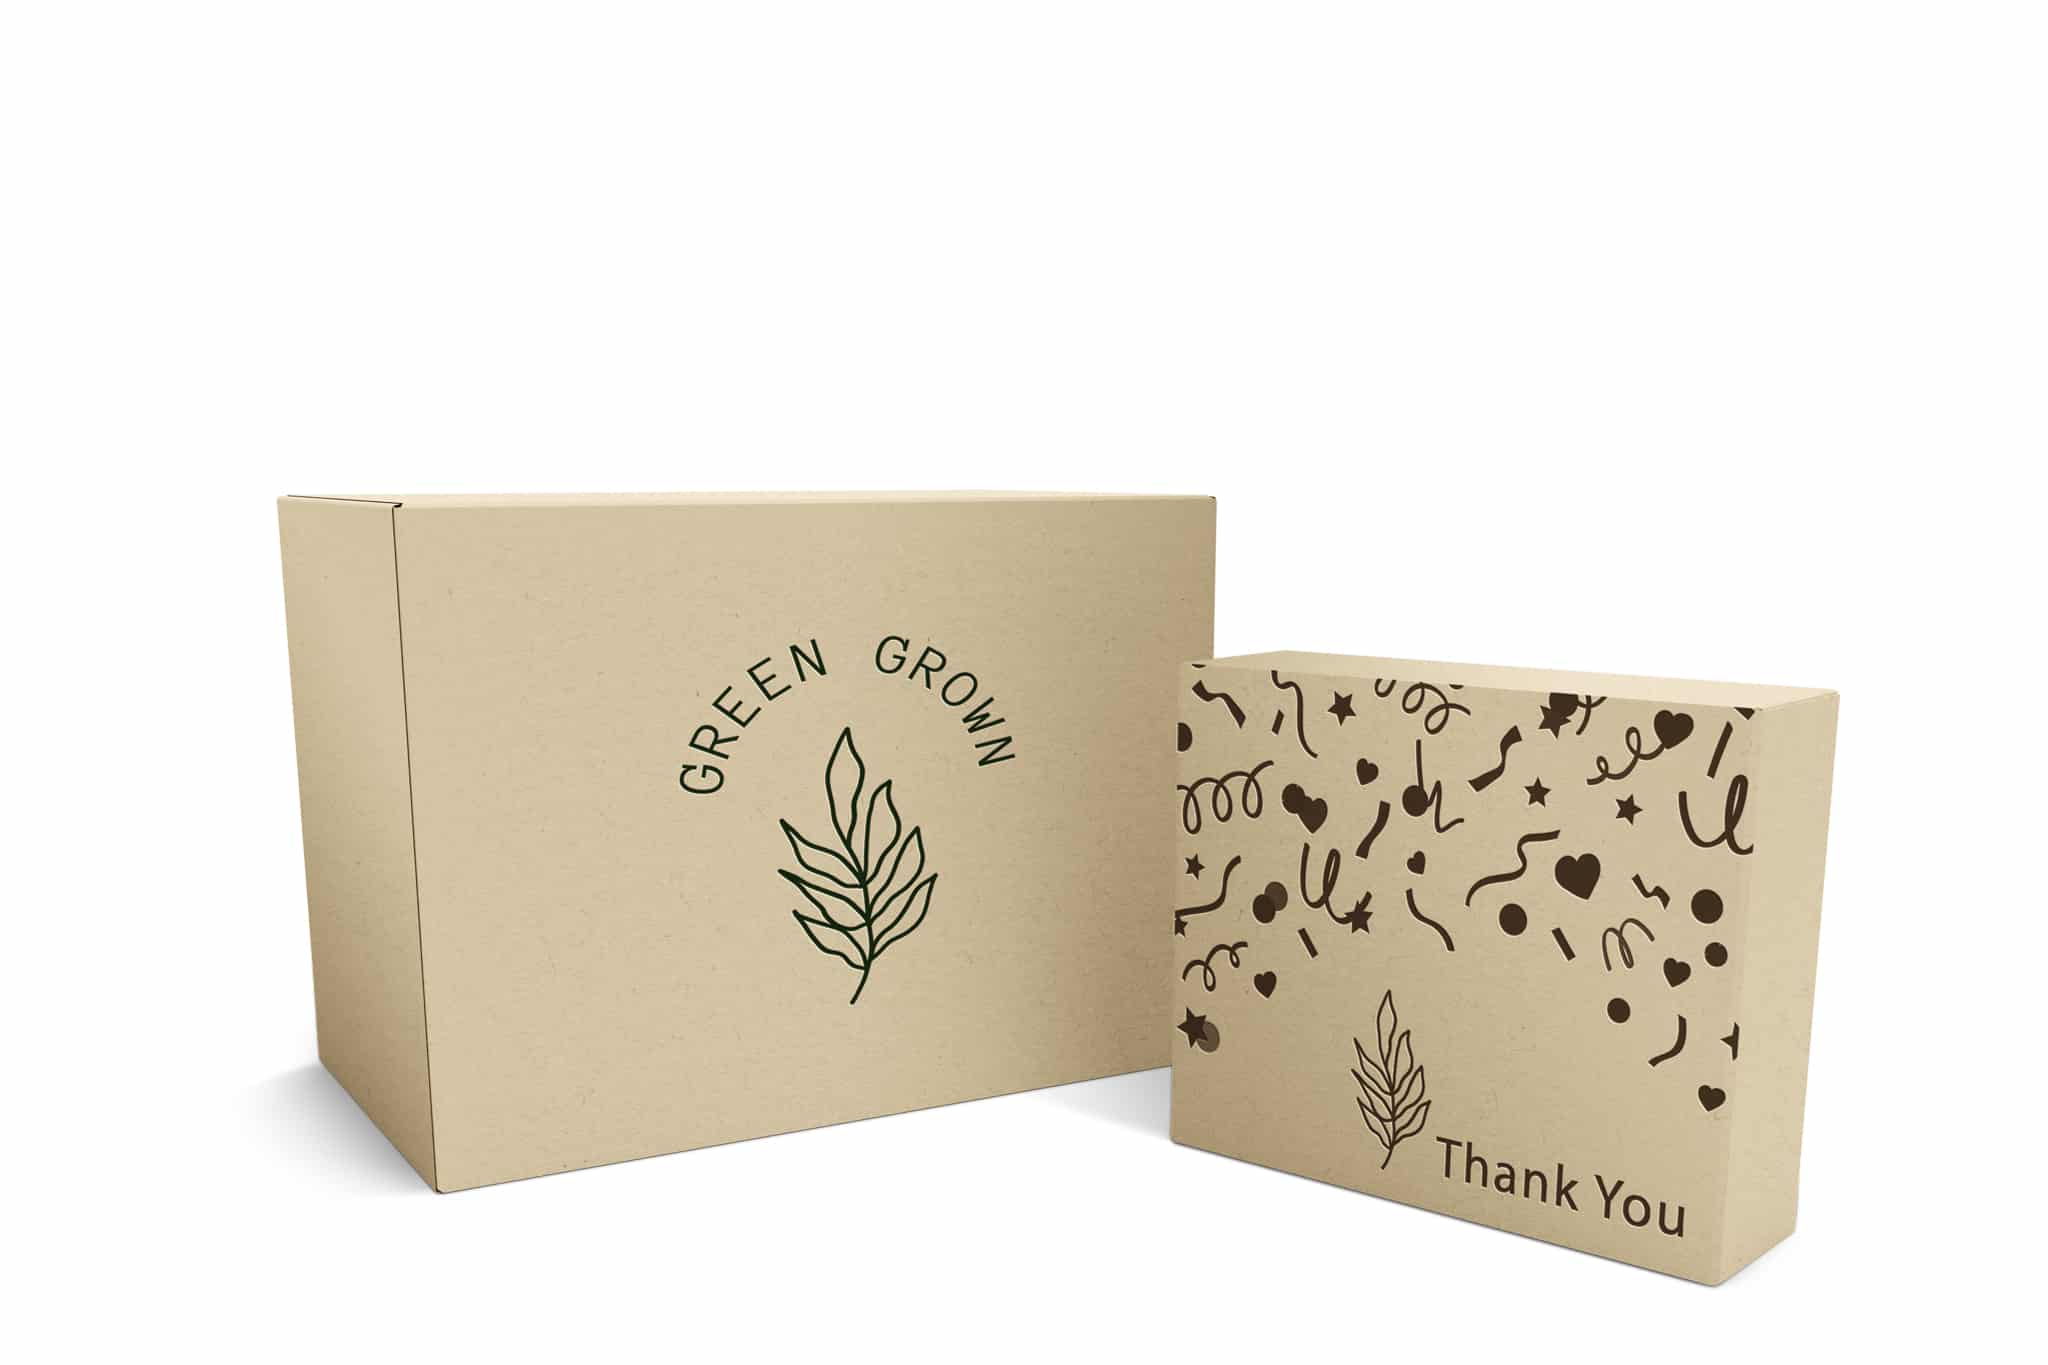 Green-grow-lifestyle-box